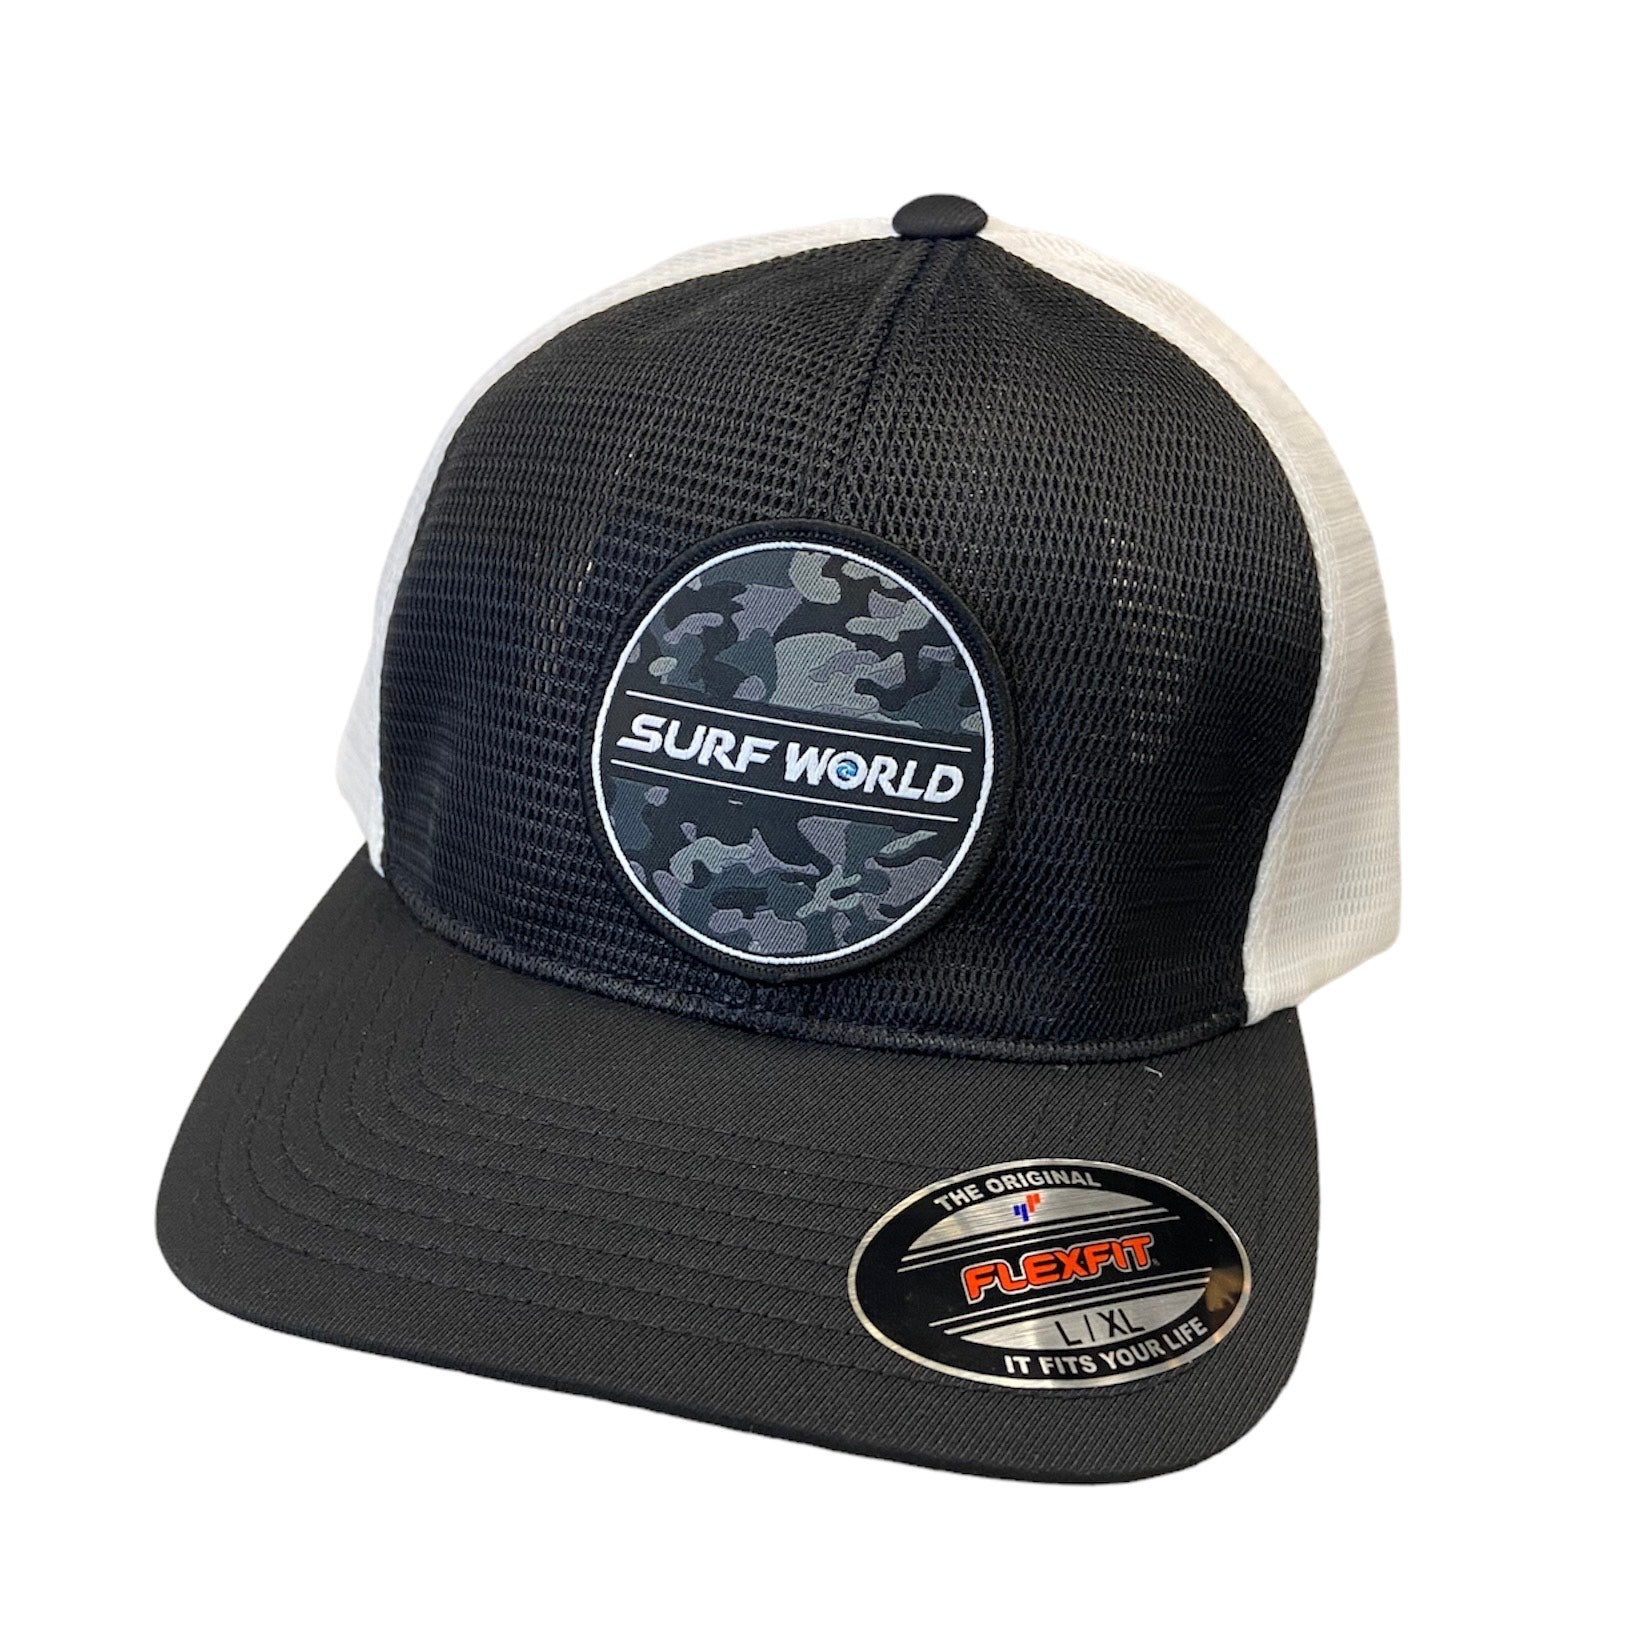 Surf World All Mesh Trucker Hat Hats Black White Camo L/XL